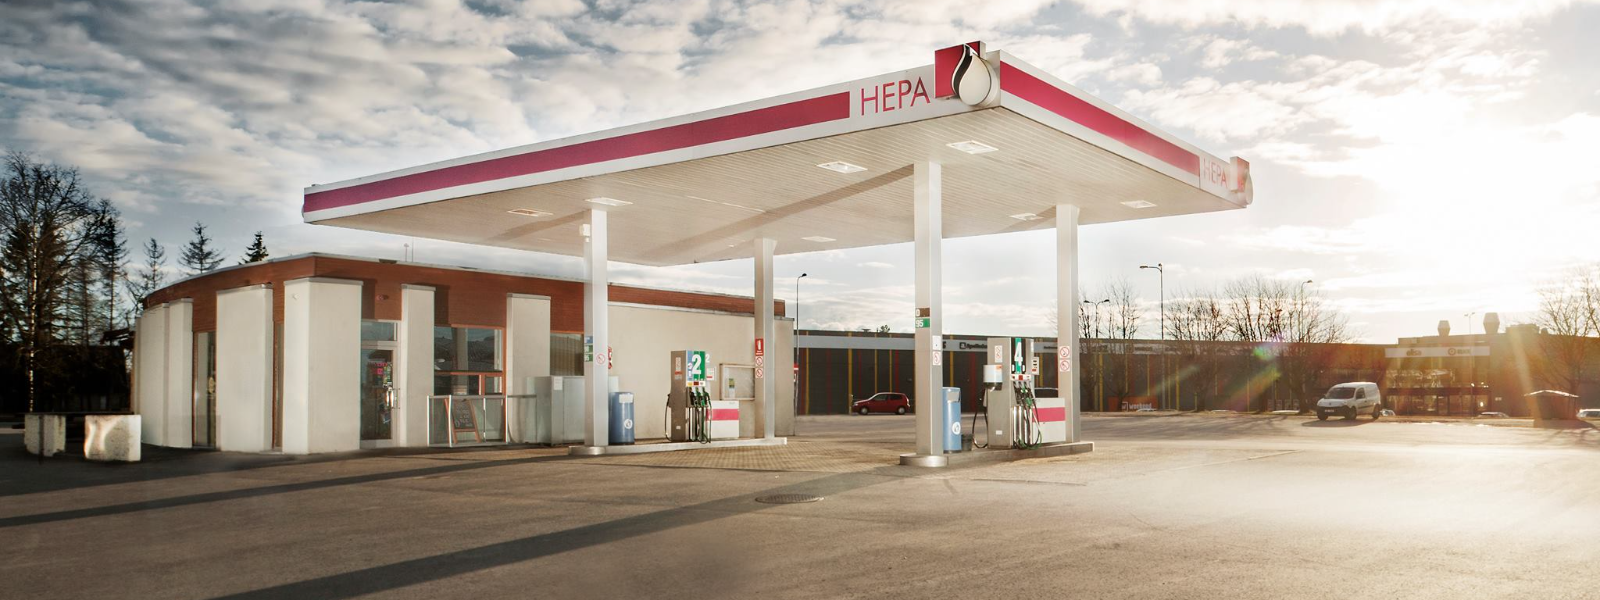 HEPA OÜ - petrol stations, petrol stations and petrol stations, fuels, Petroleum and distillates, Trade, Liquid fuel, Ret...